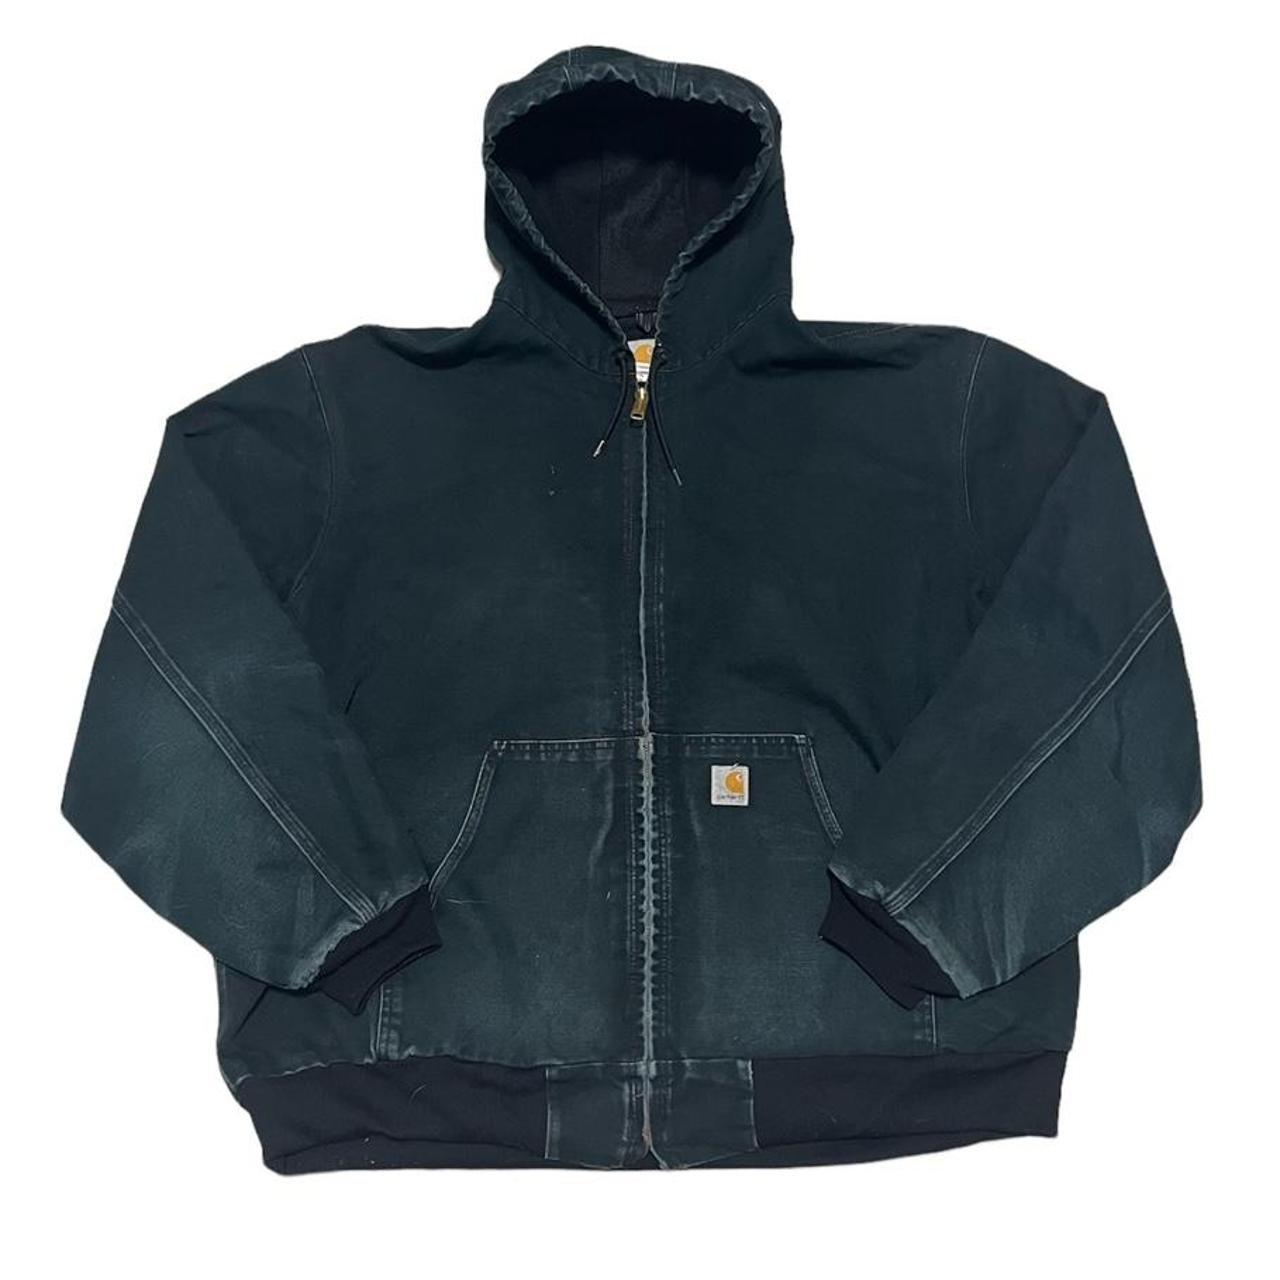 Vintage 90’s Carhartt bomber workwear jacket in... - Depop